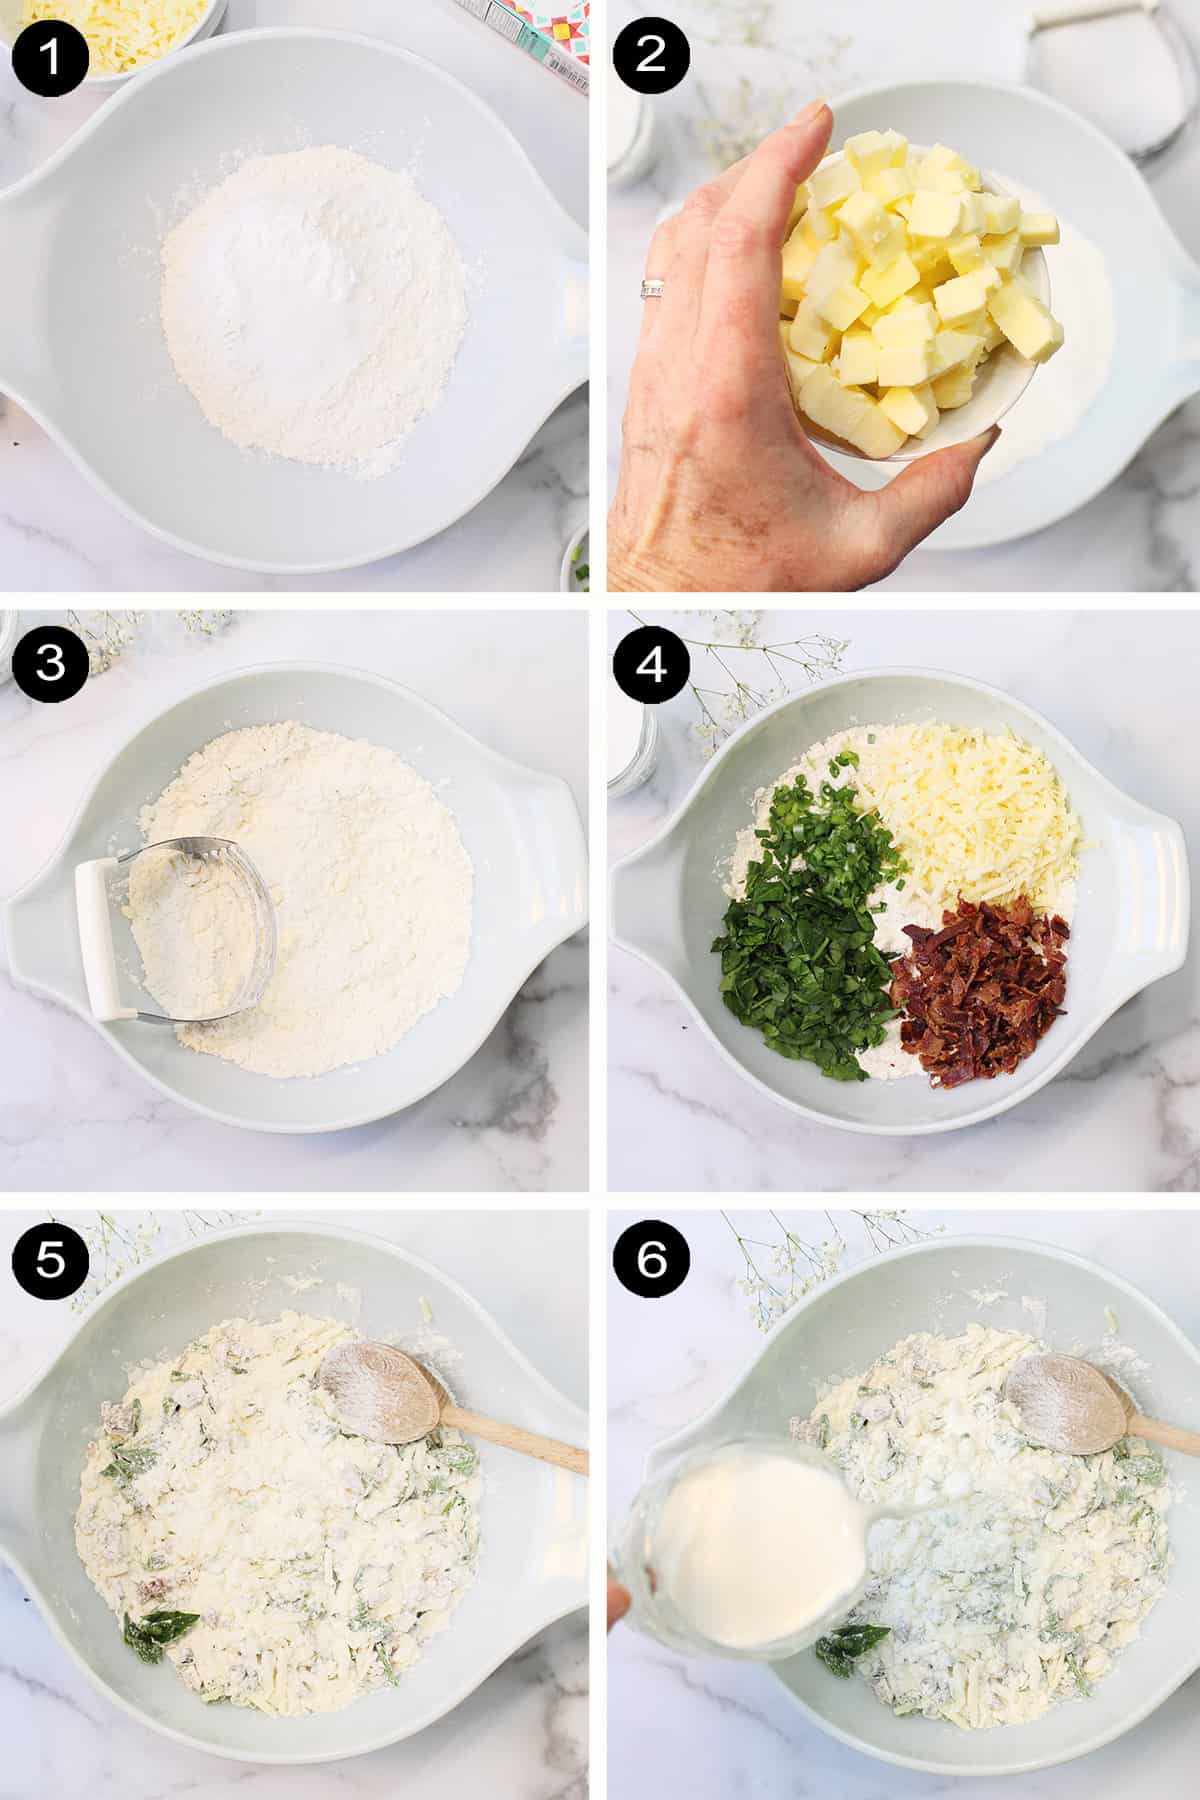 Steps 1-6 to make drop scones.